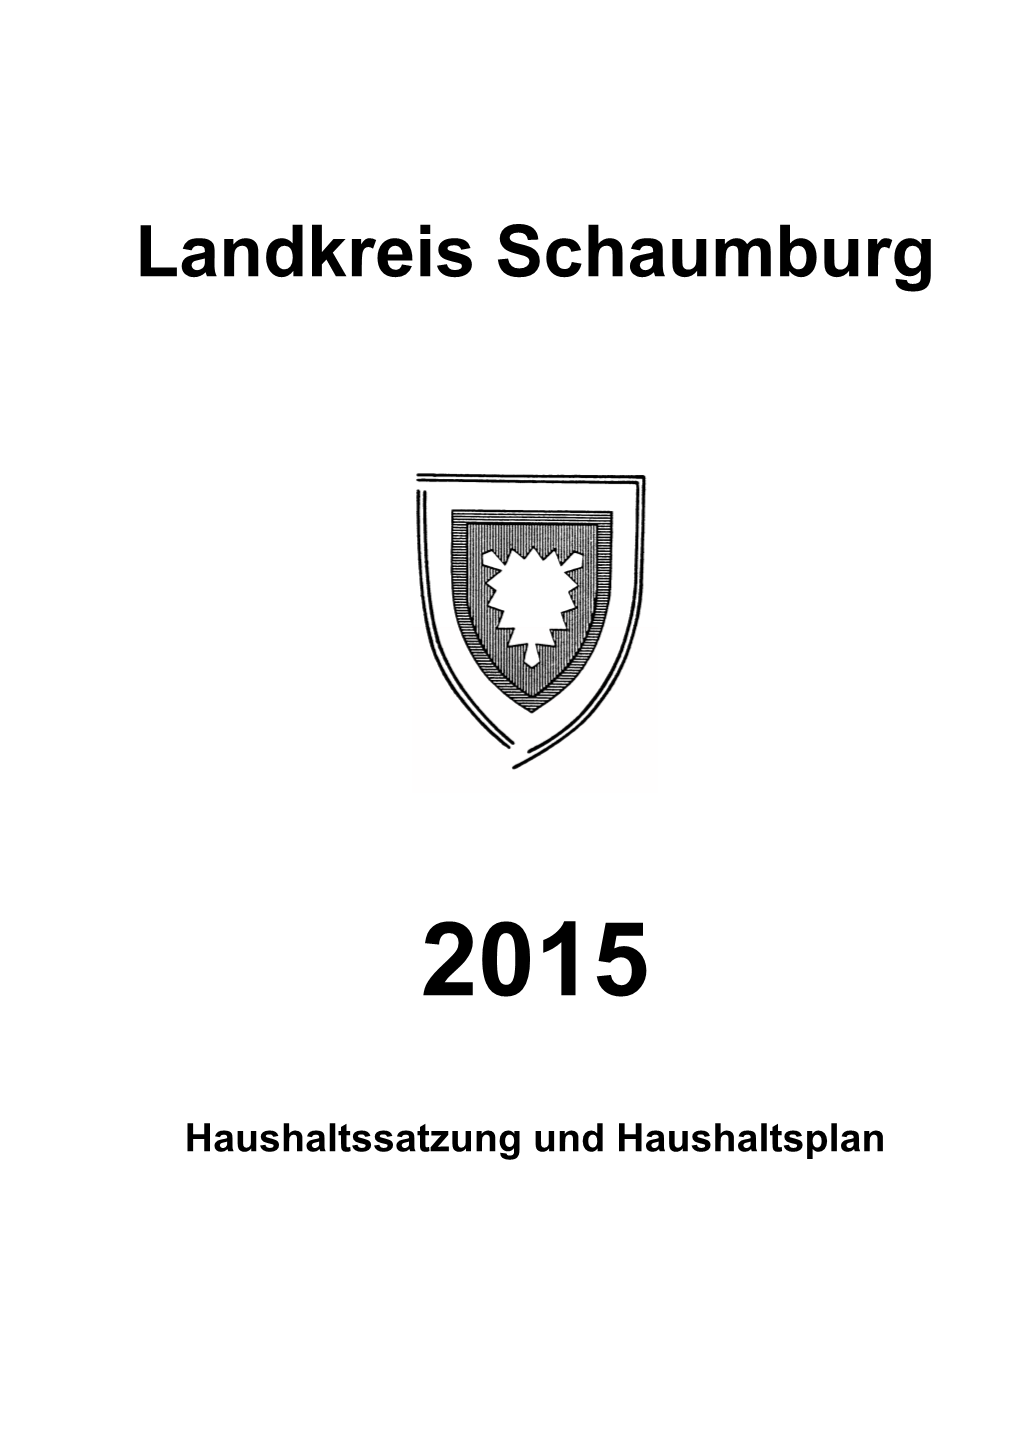 Haushaltsplan 2015 Landkreis Schaumburg